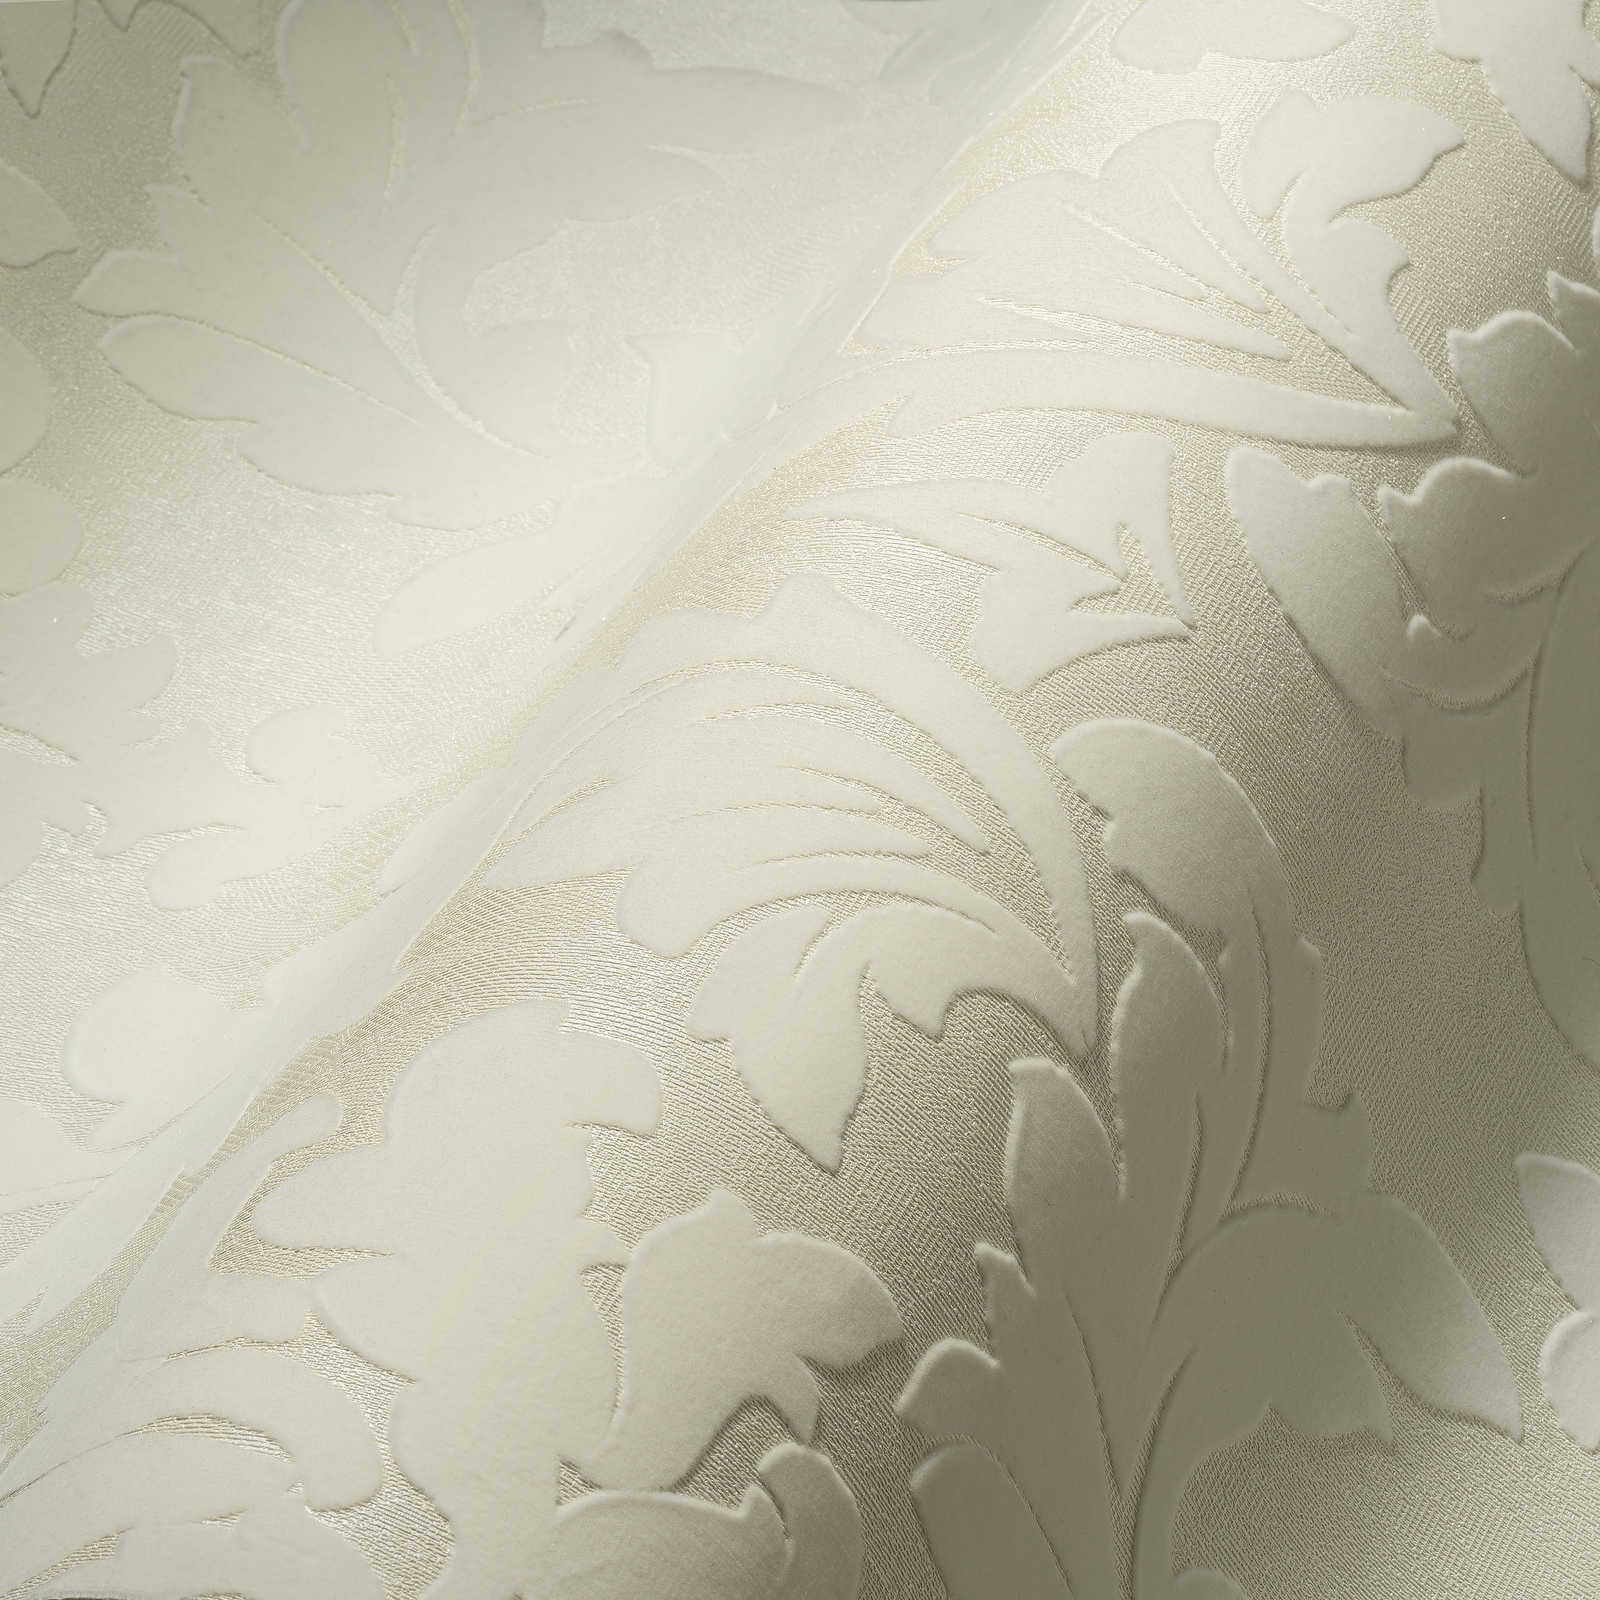             Baroque wallpaper with metallic effect & texture design - cream
        